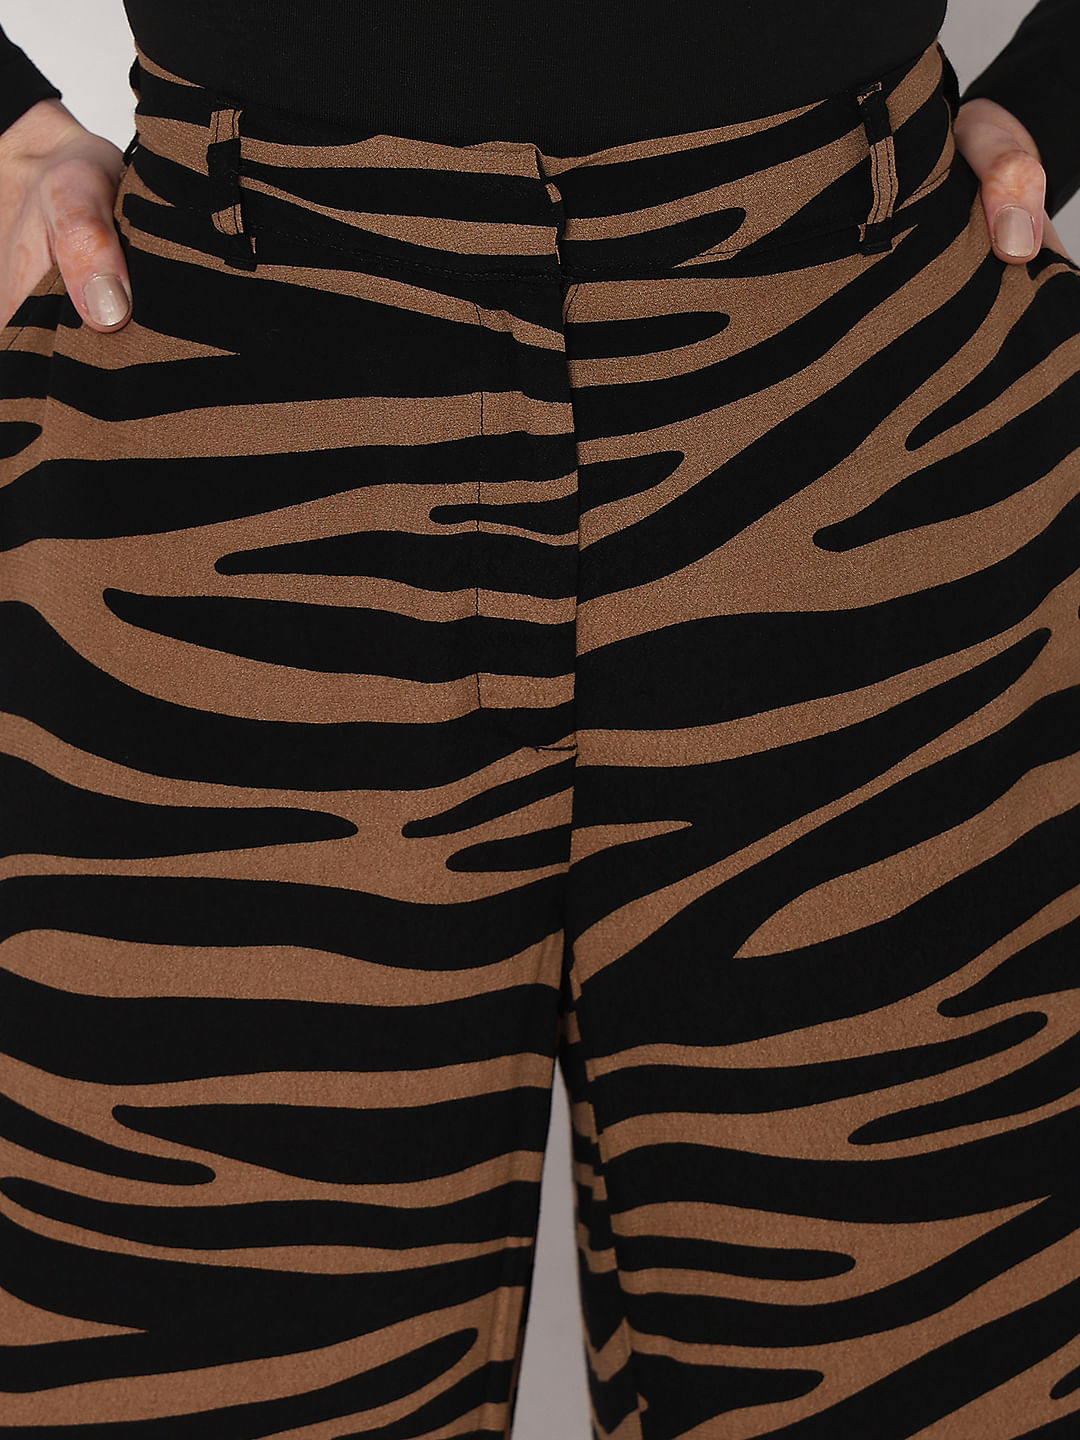 Animal Print Trousers - Buy Animal Print Trousers online in India